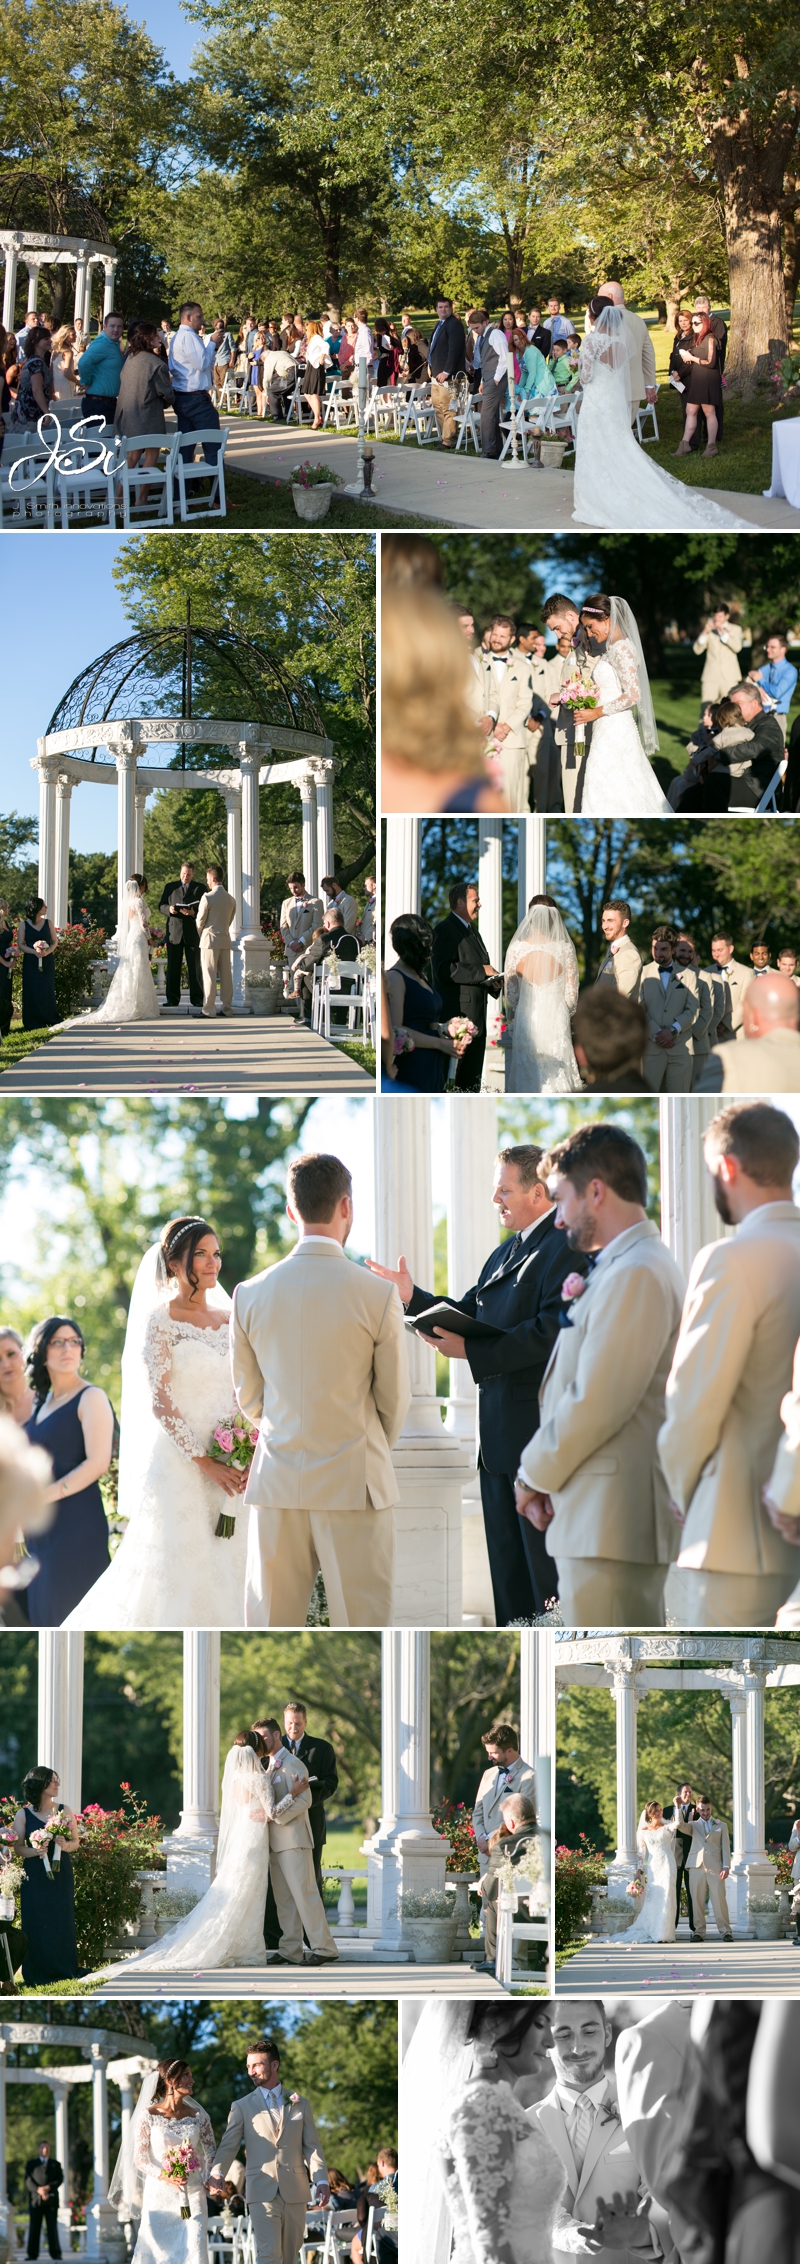 Kansas City Belvoir Winery elegant wedding outdoor ceremony photo